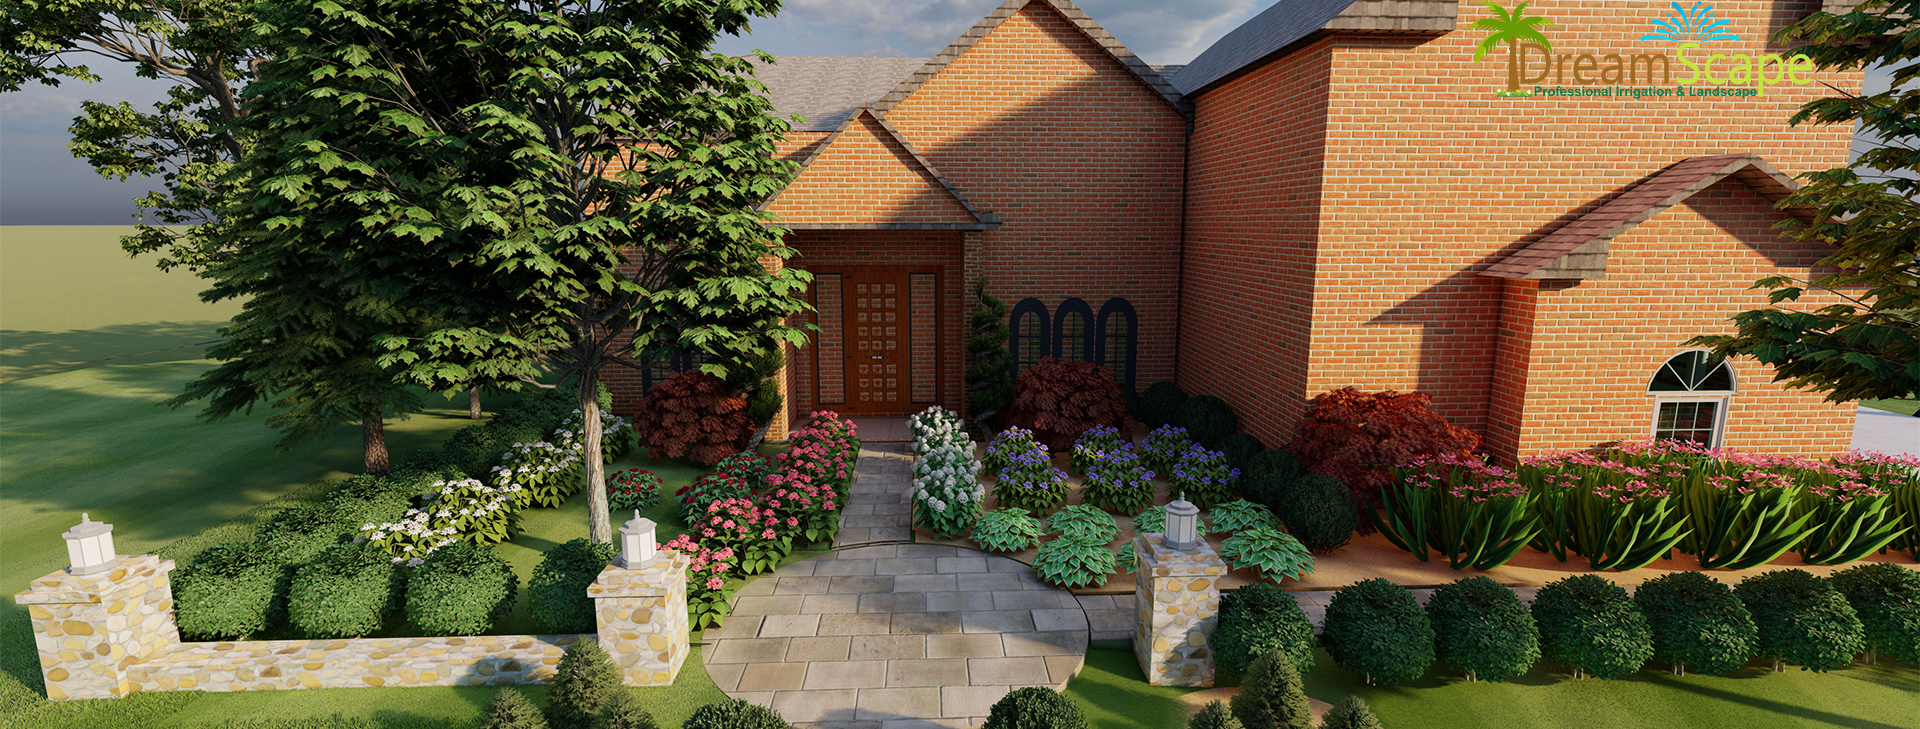 Frontyard Photo Realistic Landscape Design